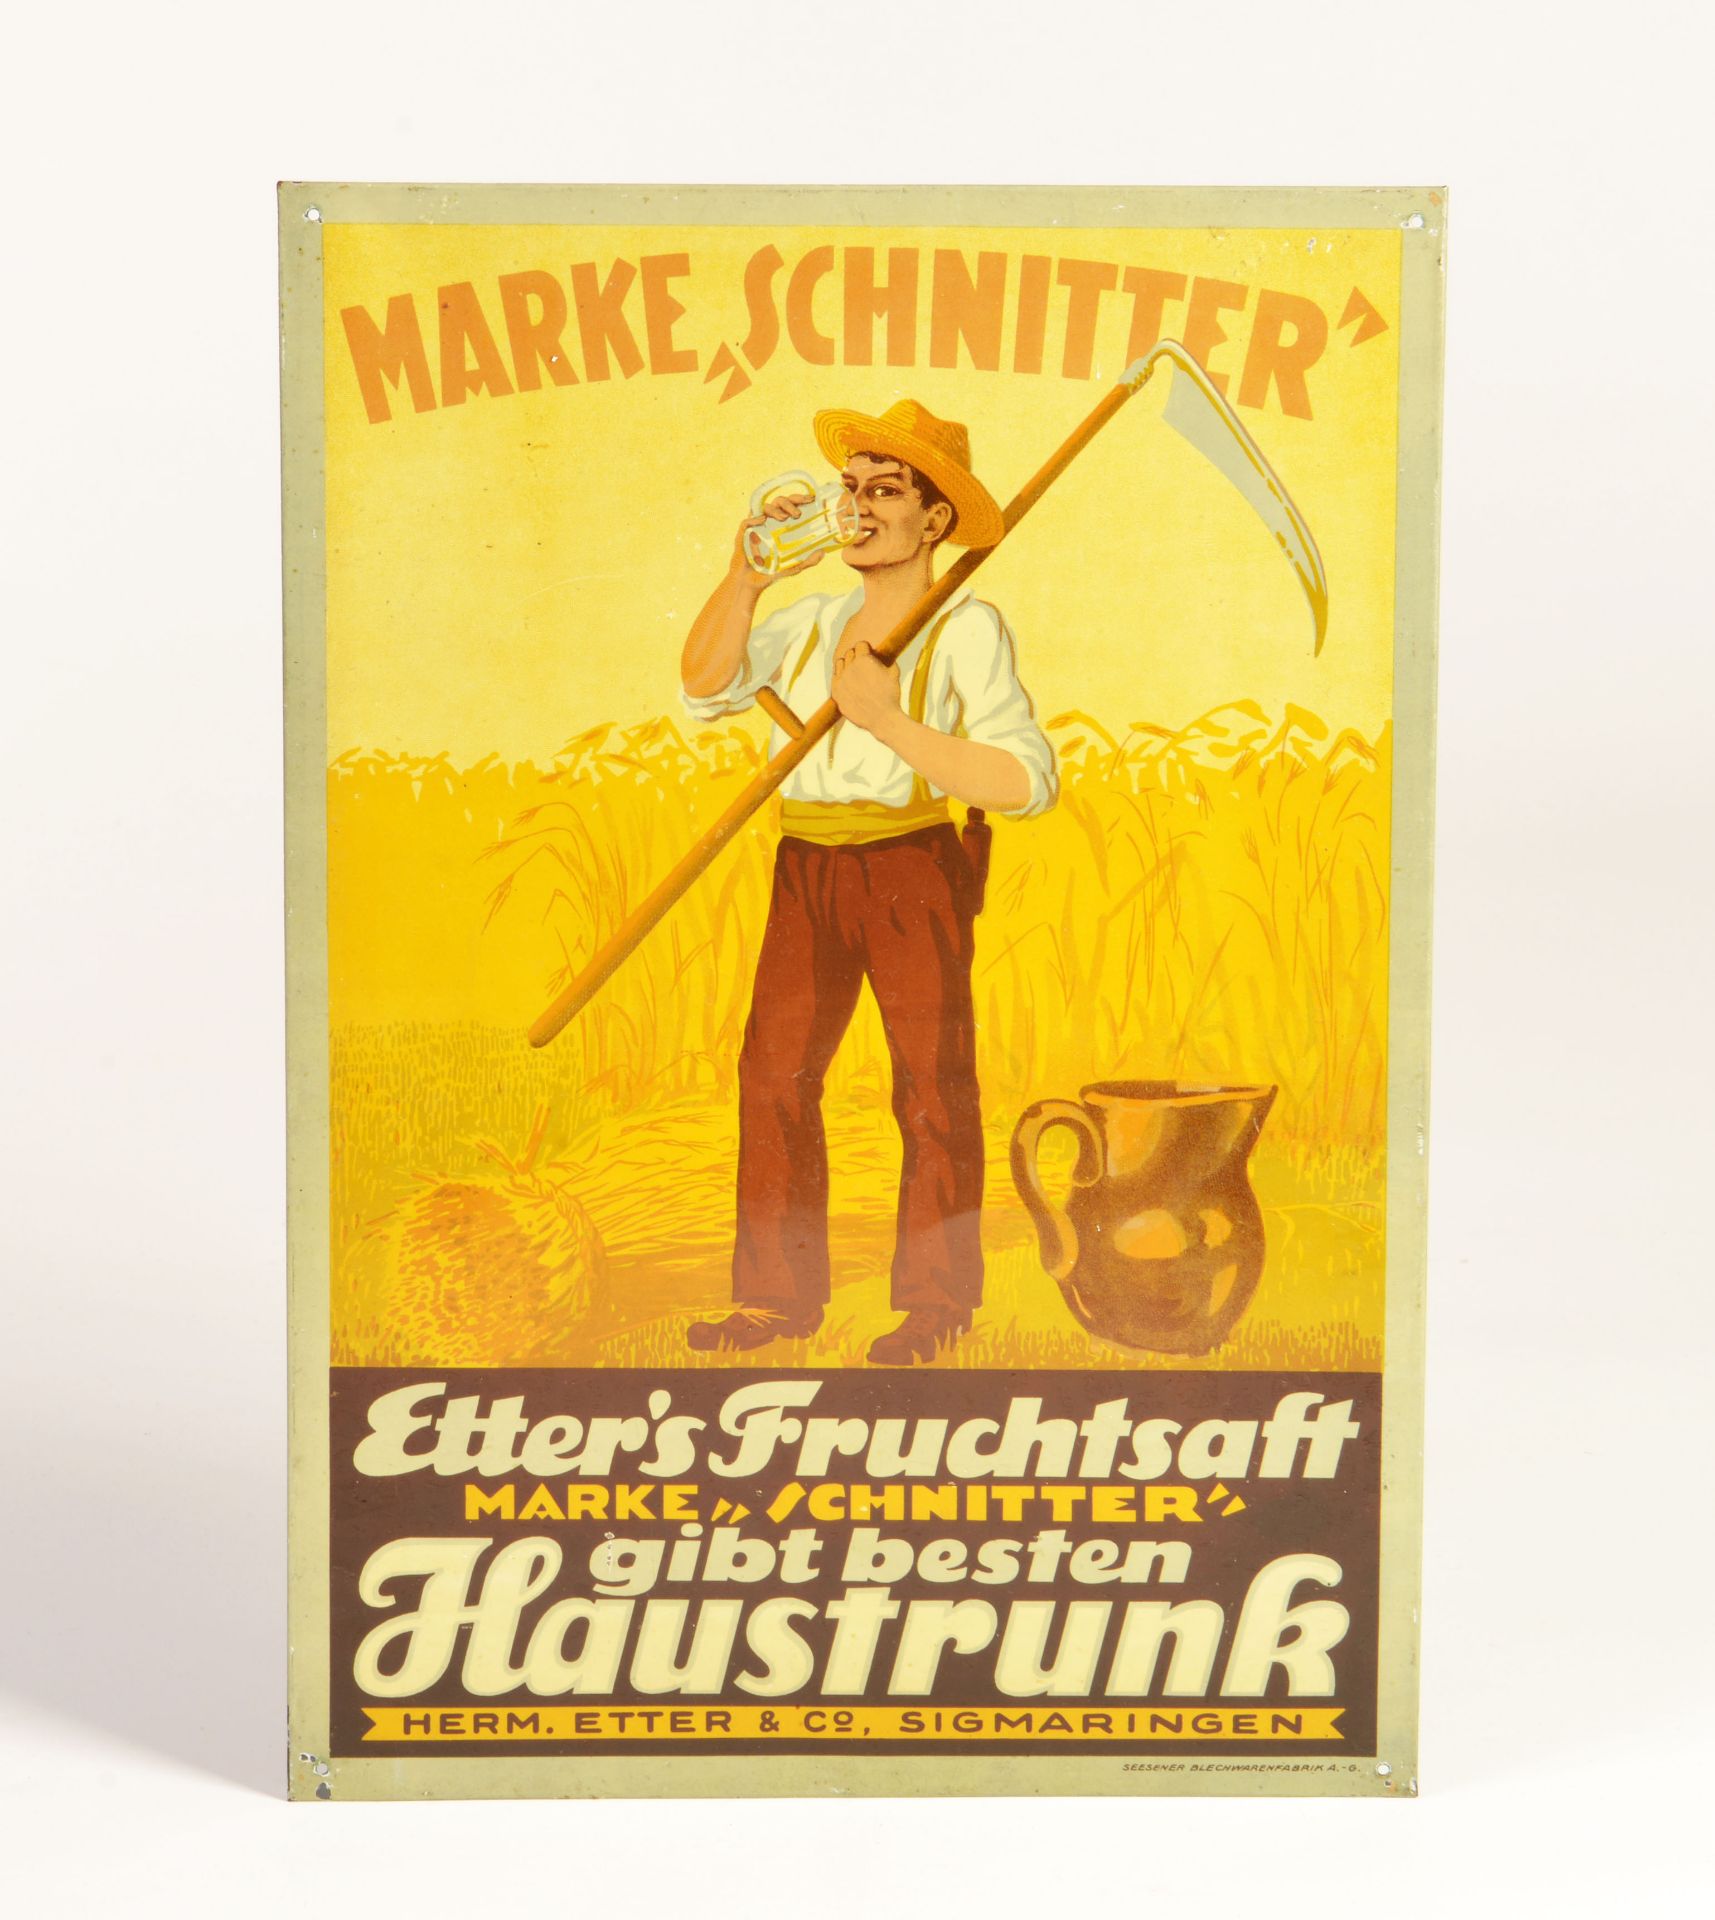 "Schnitter" Haustrunk, tin sign, 20s, 25 x 37 cm, paint d., C 2